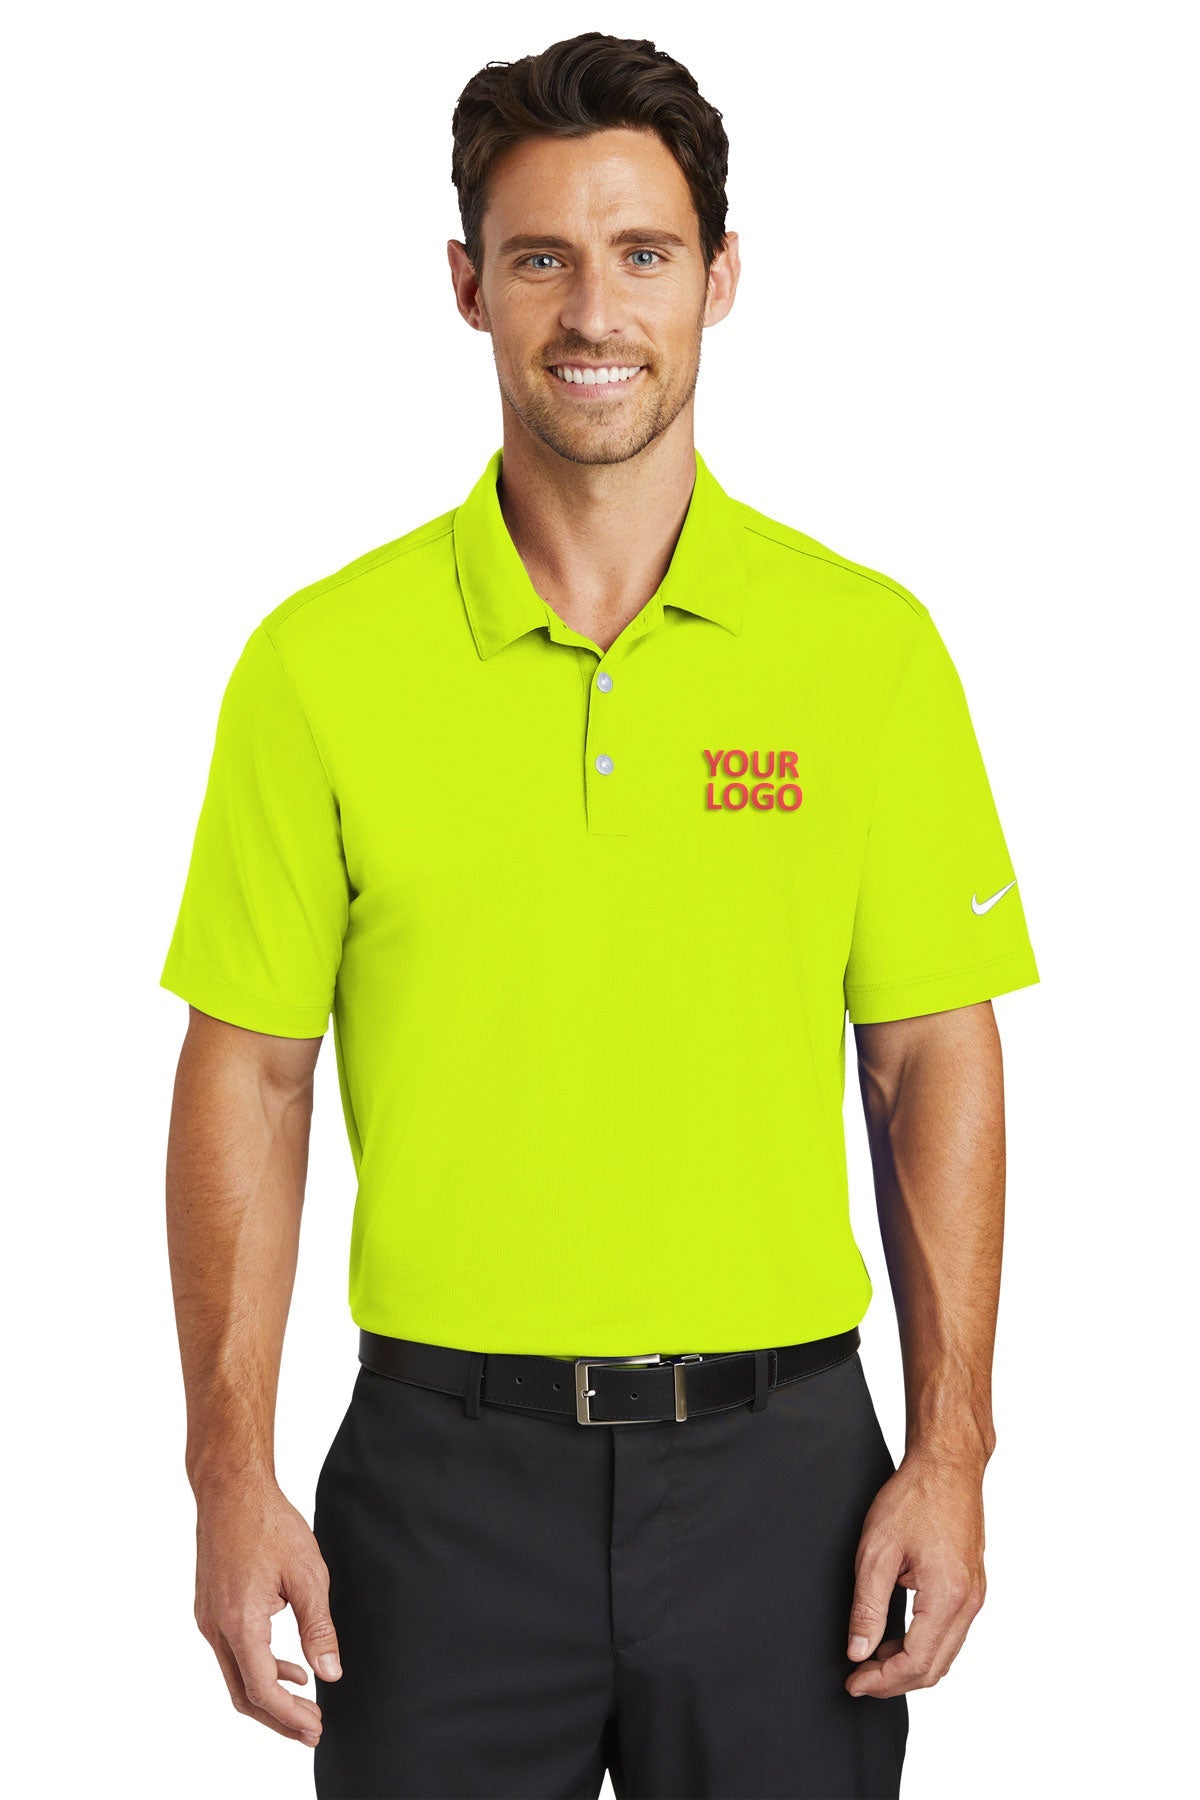 nike volt 637167 custom polo shirts for work